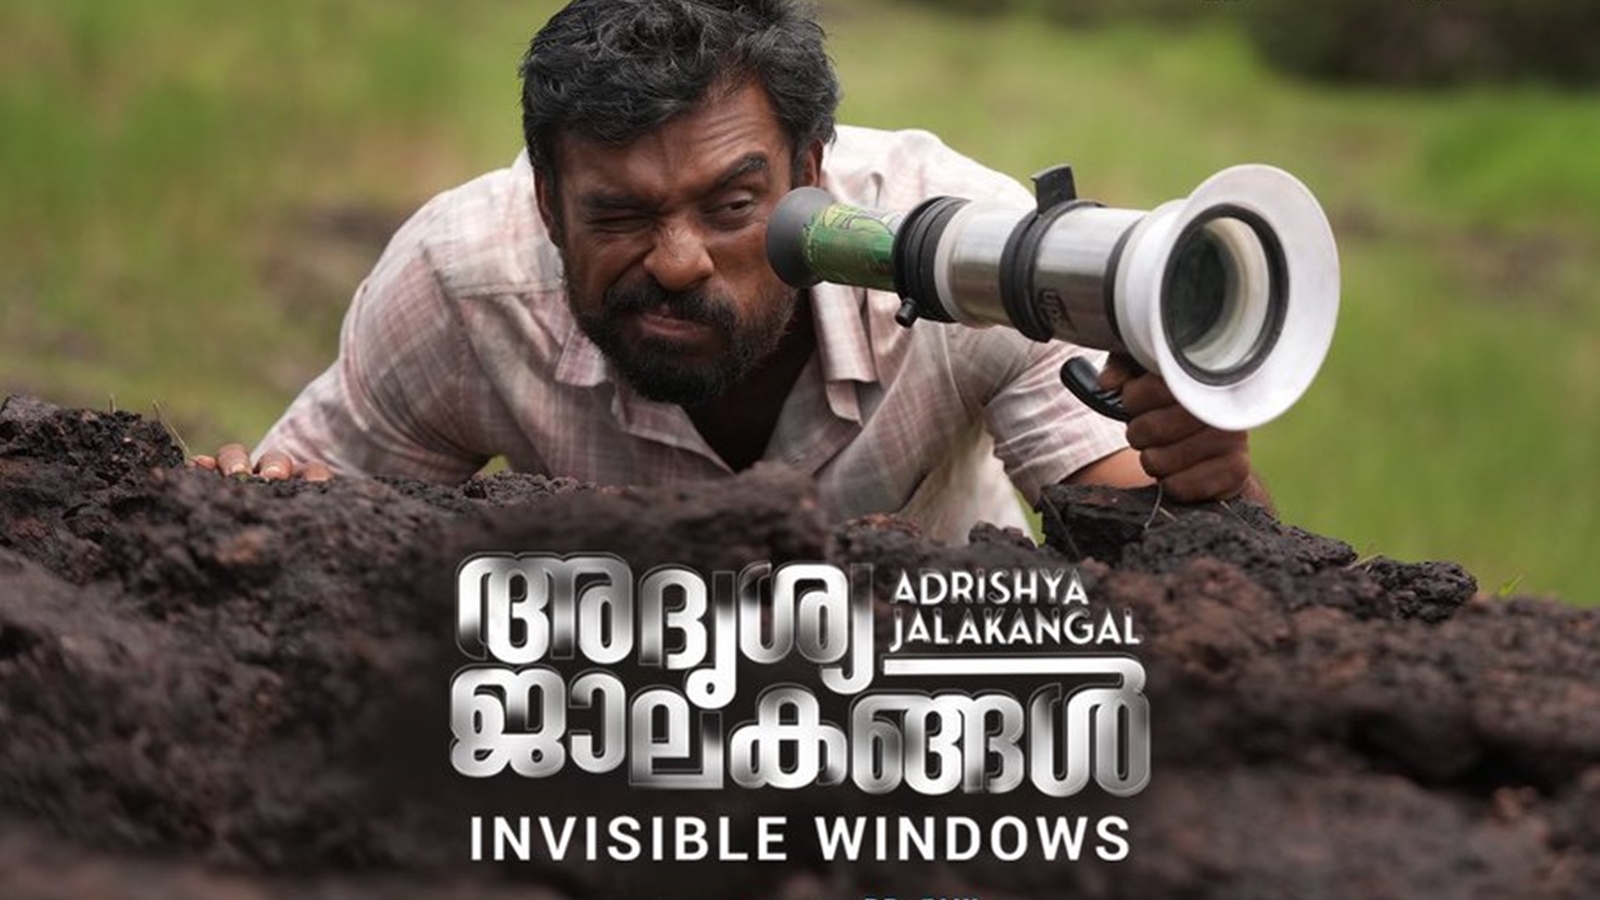 Adrishya Jalakangal movie review: Tovino Thomas, Nimisha Sajayan deliver an  exceptional anti-war film | Movie-review News - The Indian Express